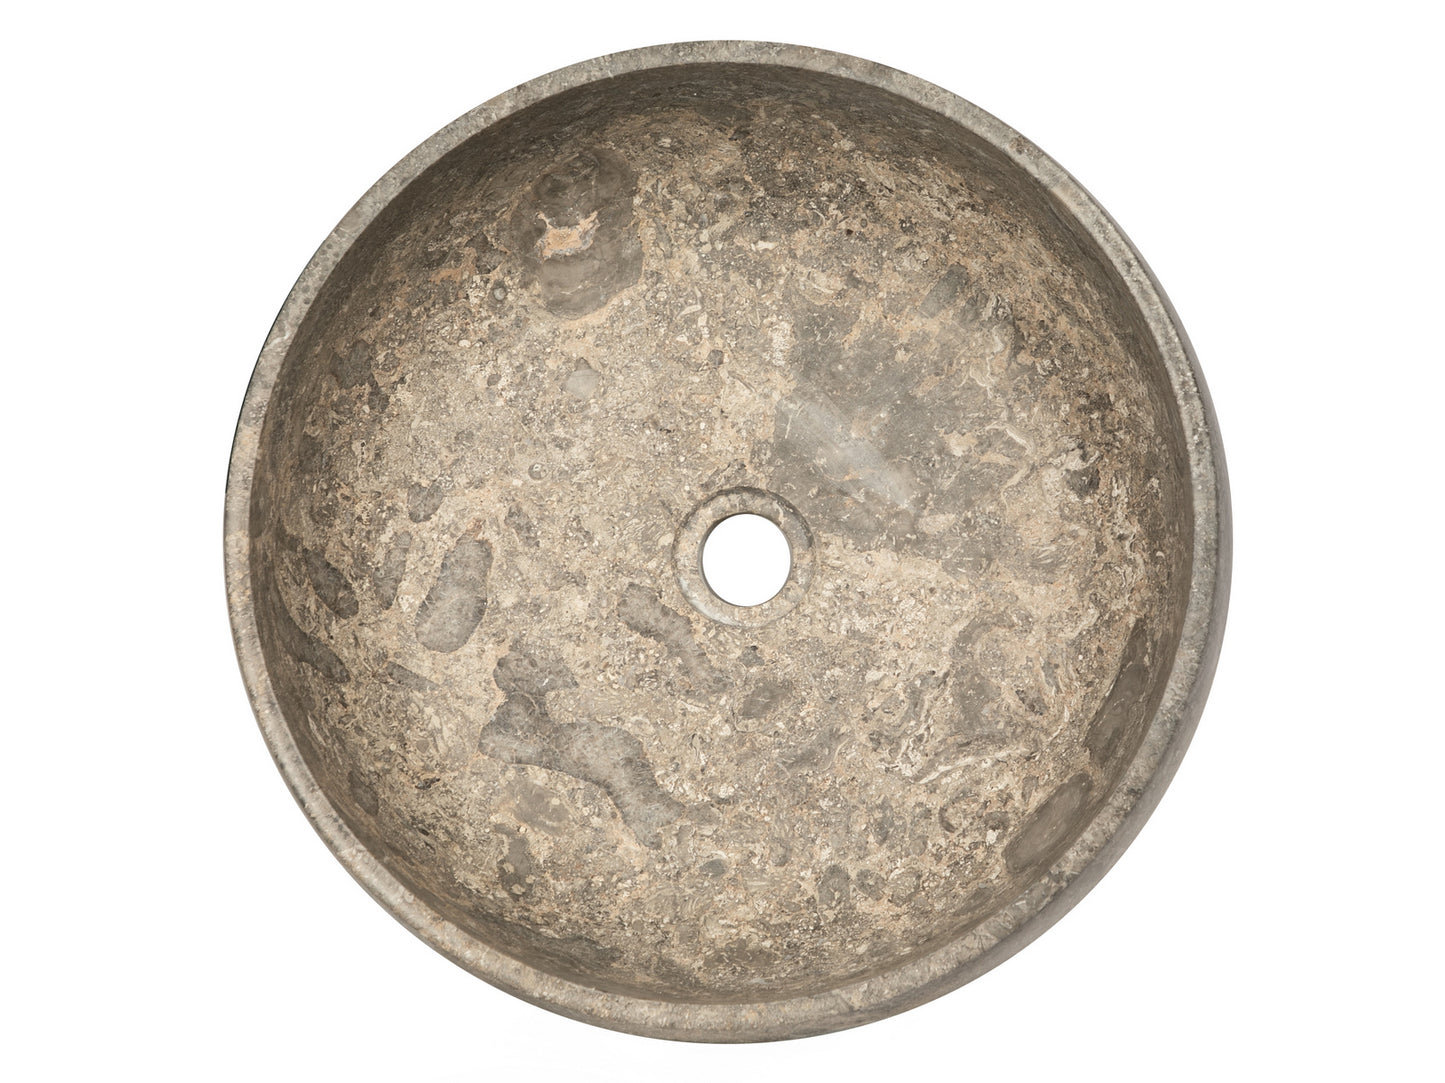 Gral Round Vessel Sink in Gray Marble